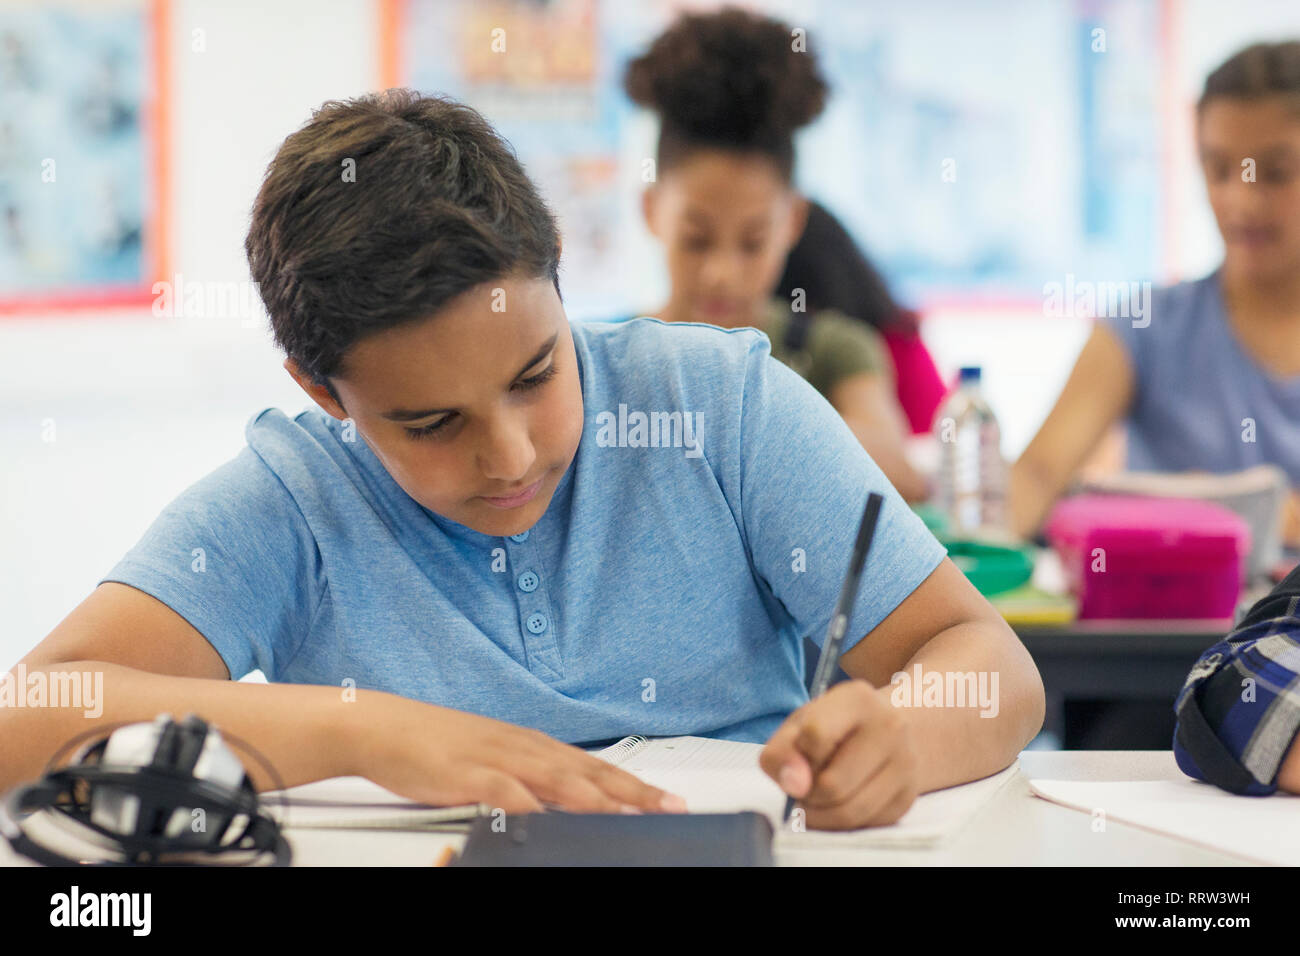 Junior high school boy student doing homework in classroom Stock Photo